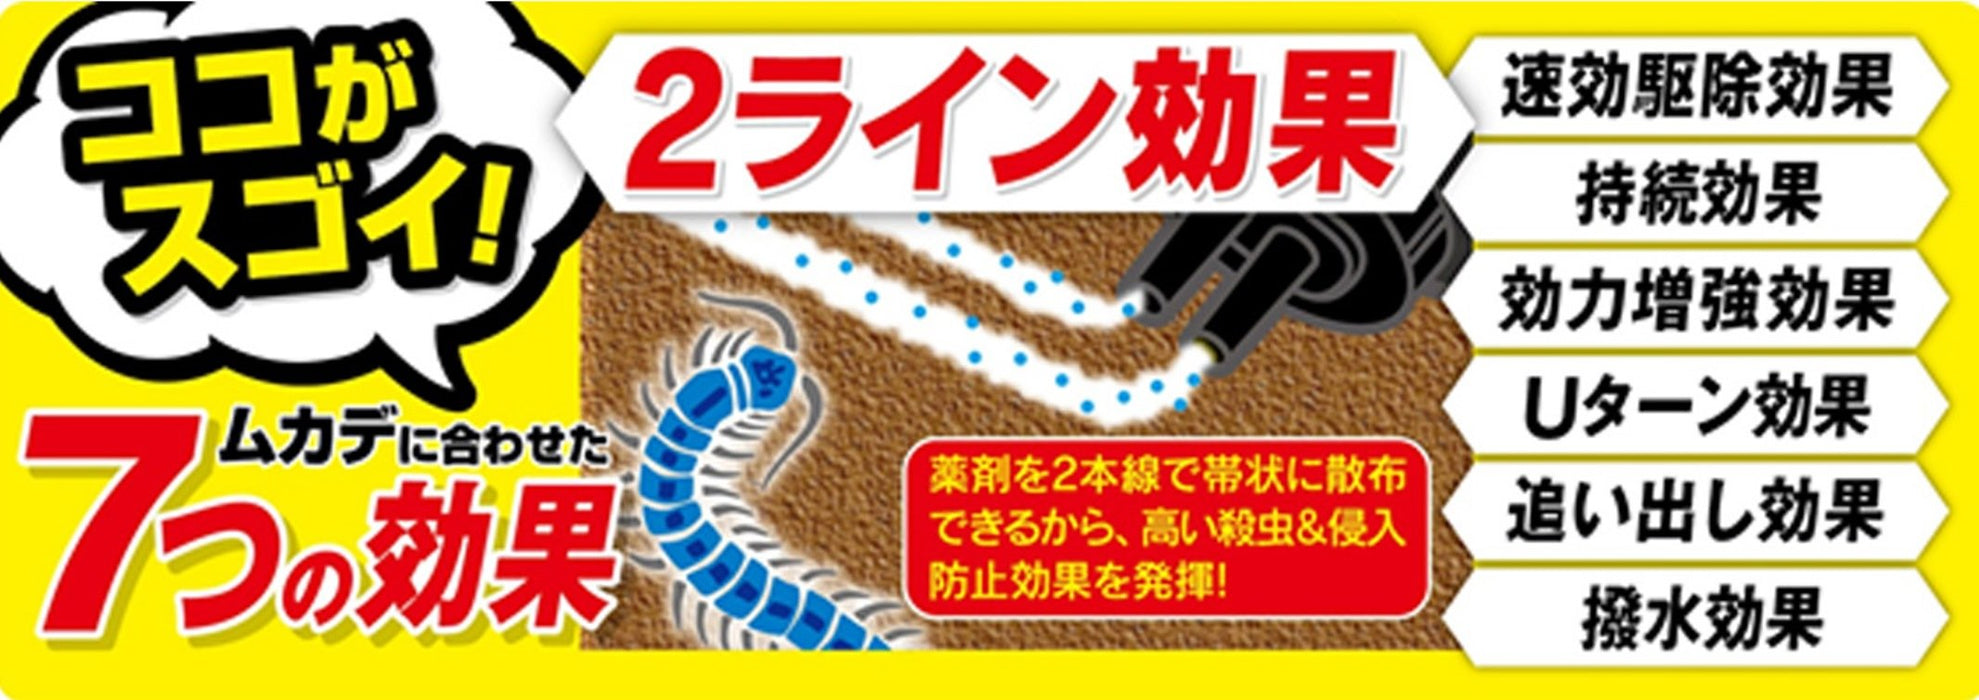 Centipede Loli Mukadecorori Powder 550G From Japan